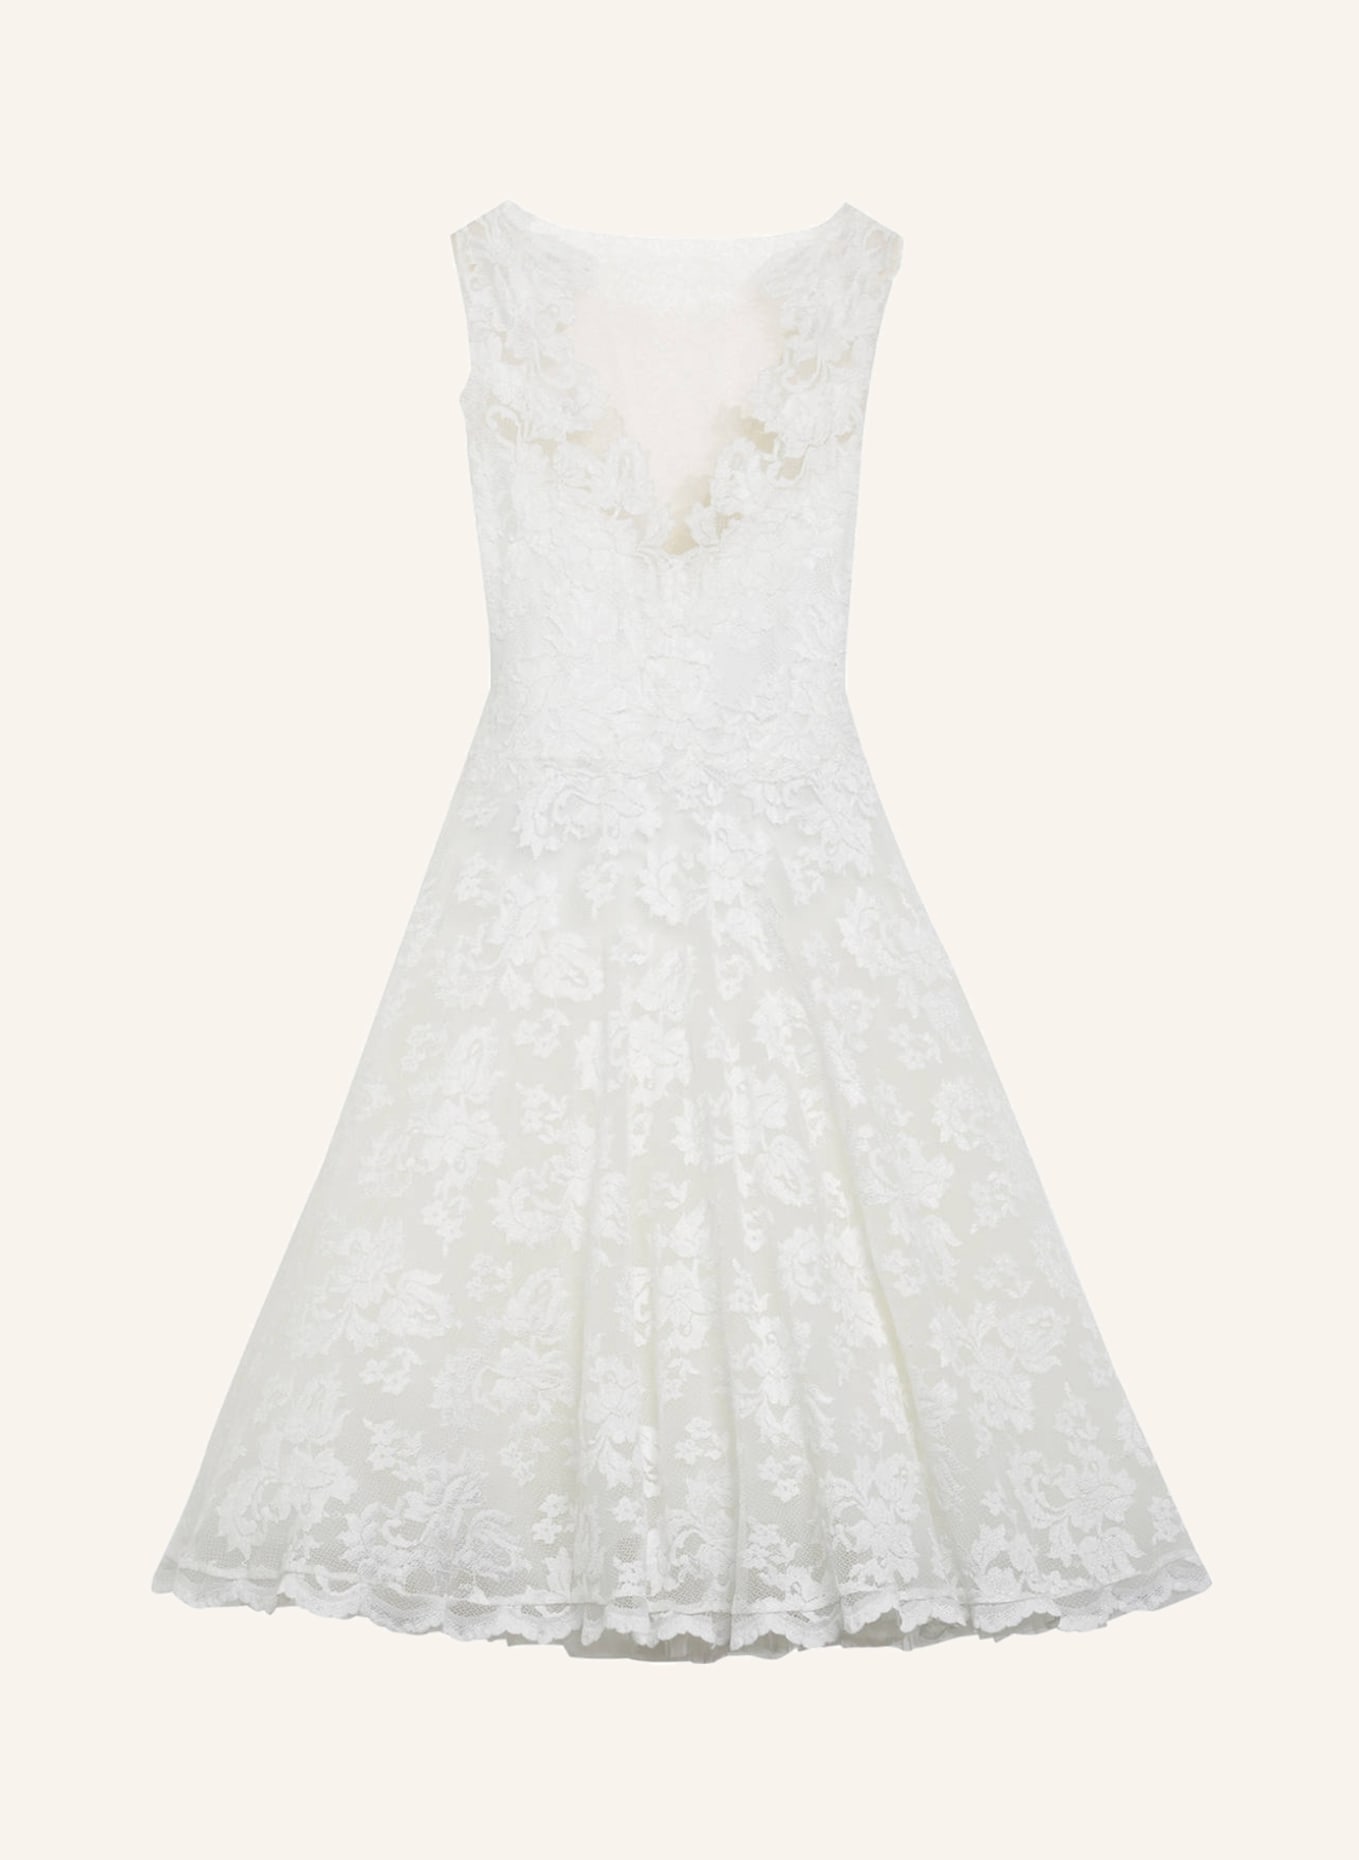 OLVI'S Cocktail dress with lace trim, Color: WHITE (Image 2)